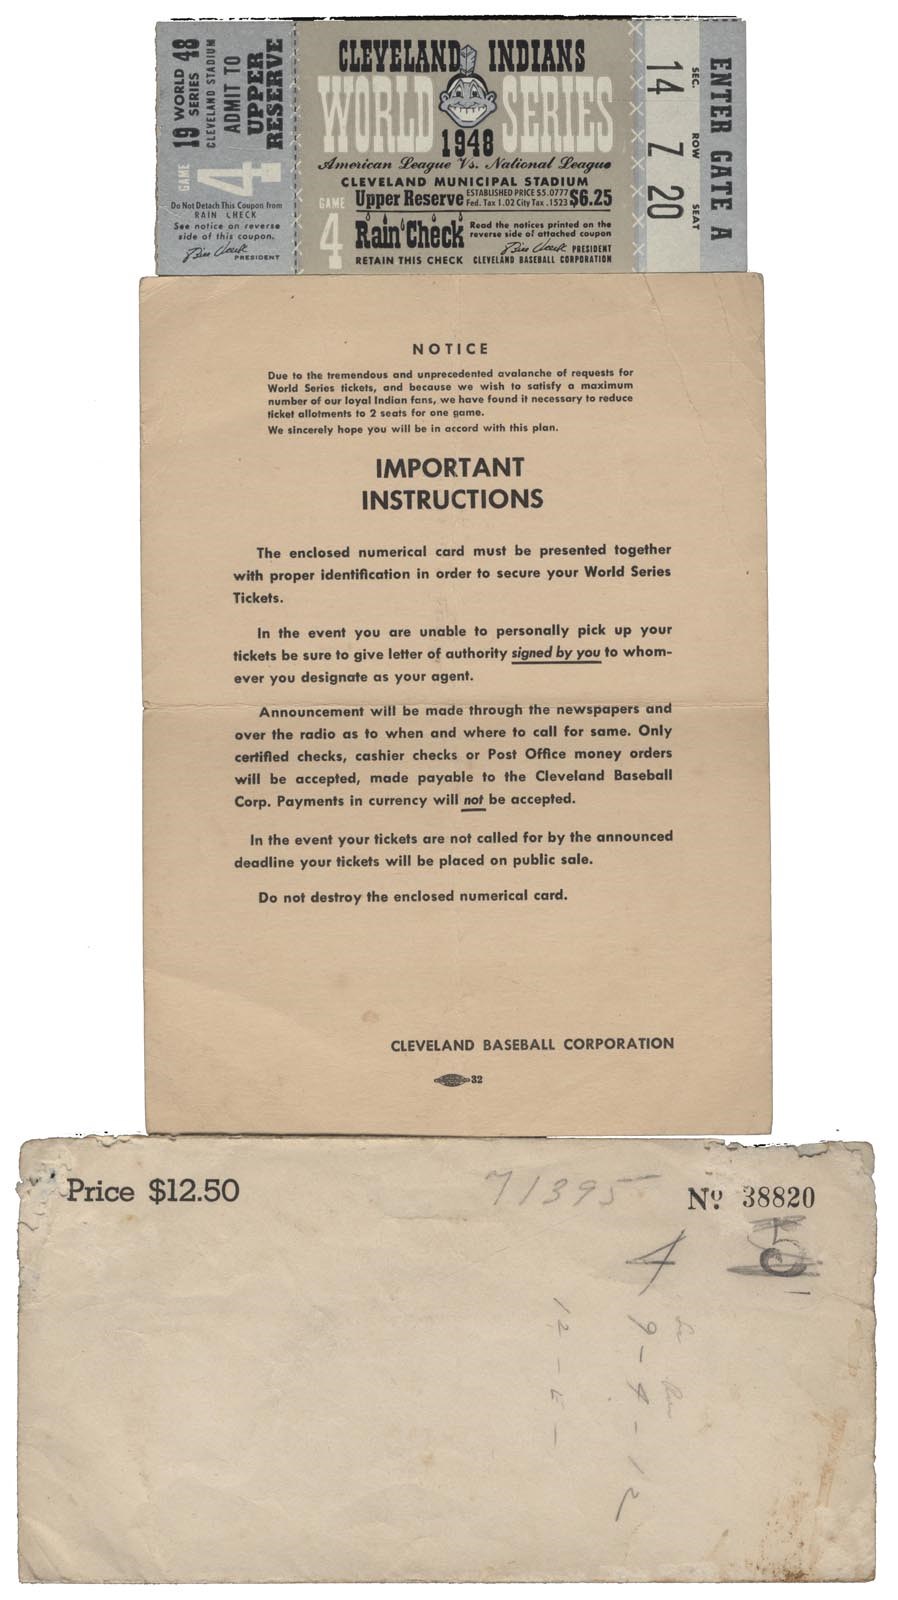 Cleveland Indians - 1948 Cleveland Indians World Series Ticket w/Original Envelope & Mailer (Game 4)